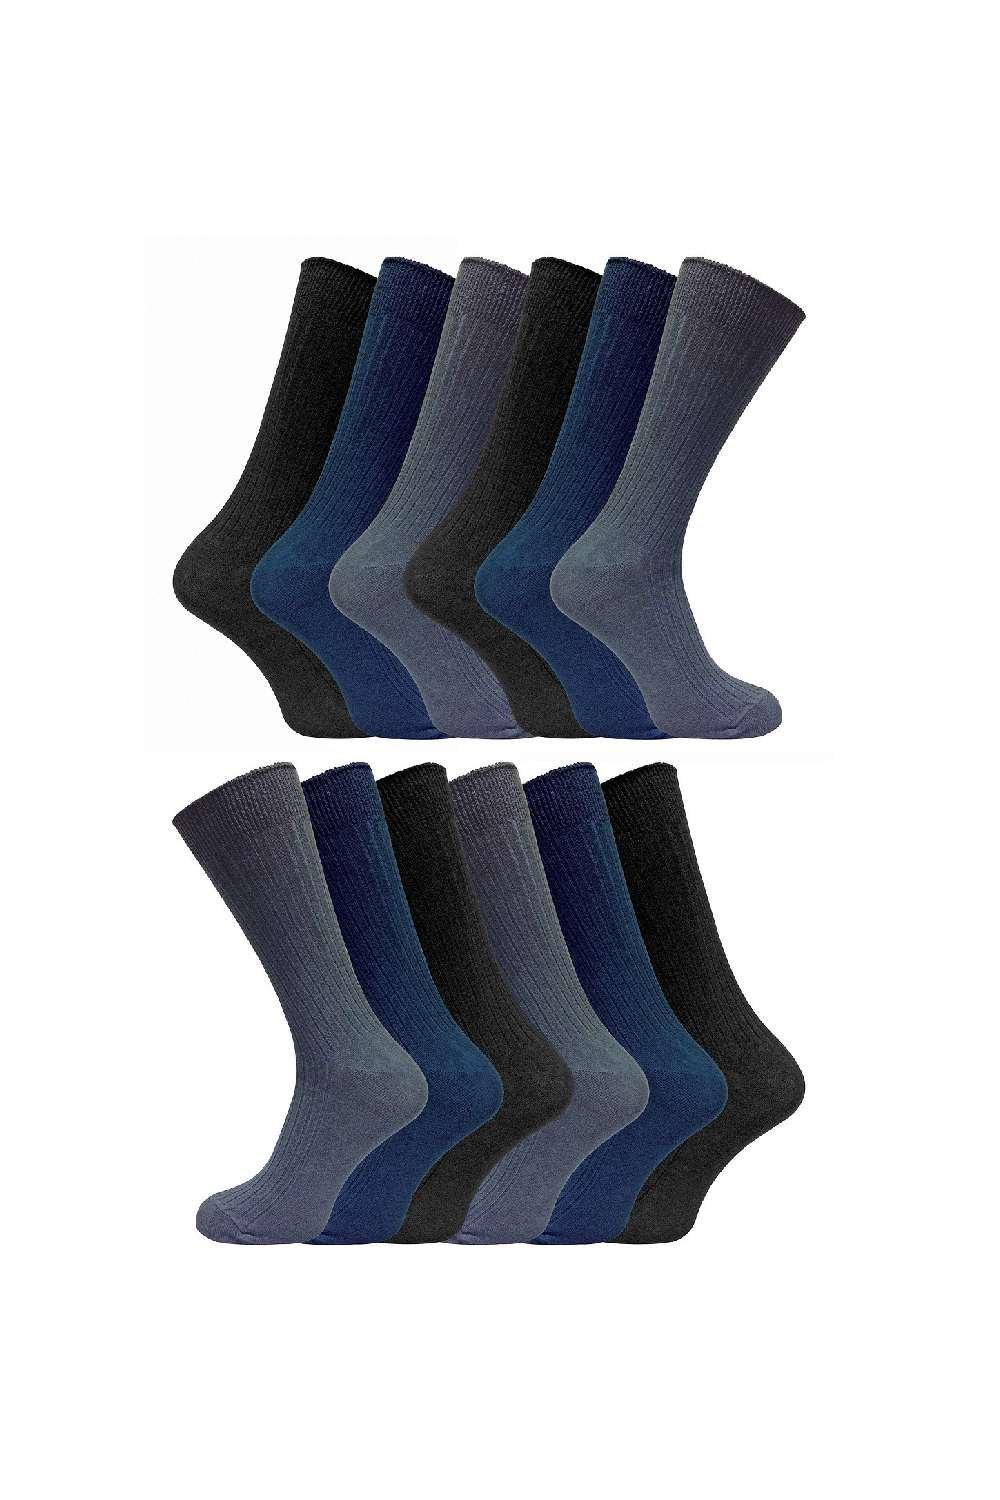 12 Pair Soft Breathable 100% Cotton Ribbed Dress Socks